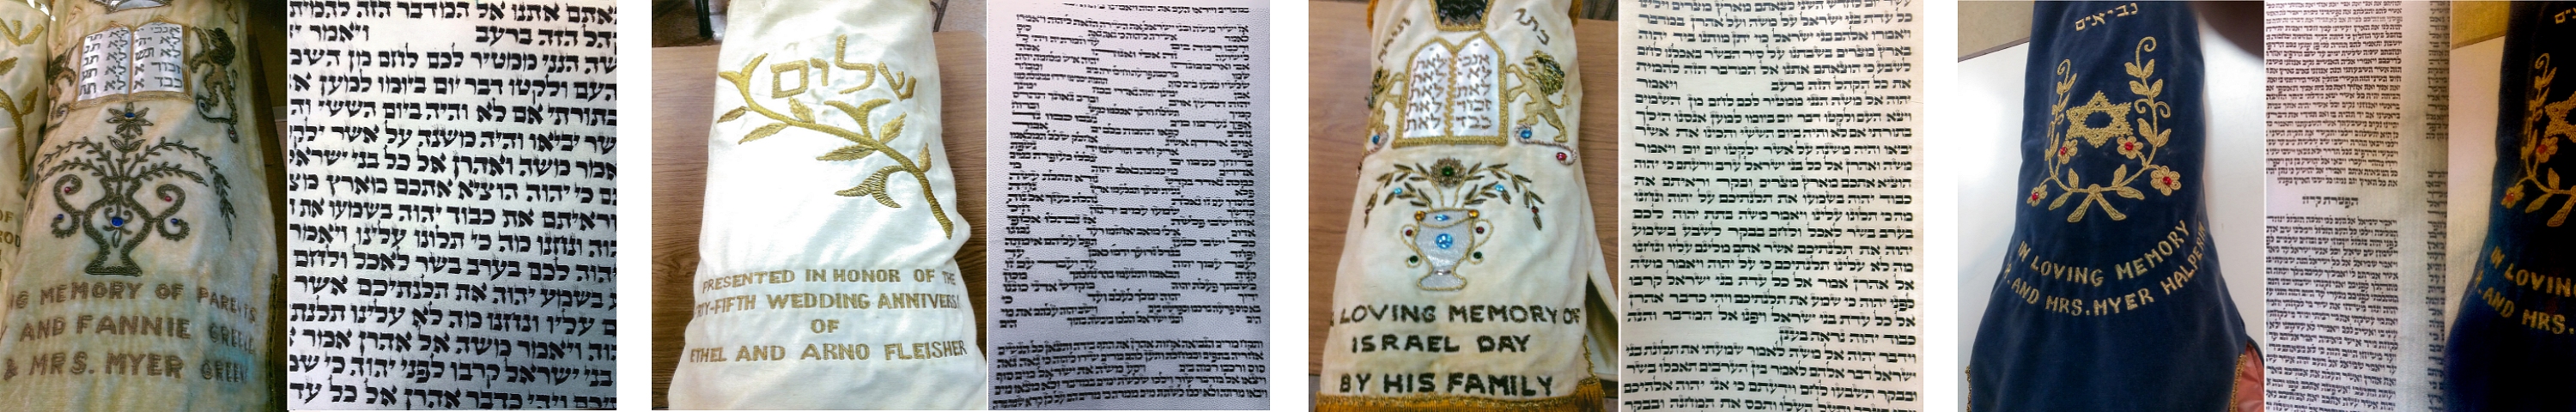 Thee Torahs and One Haftorah Scroll